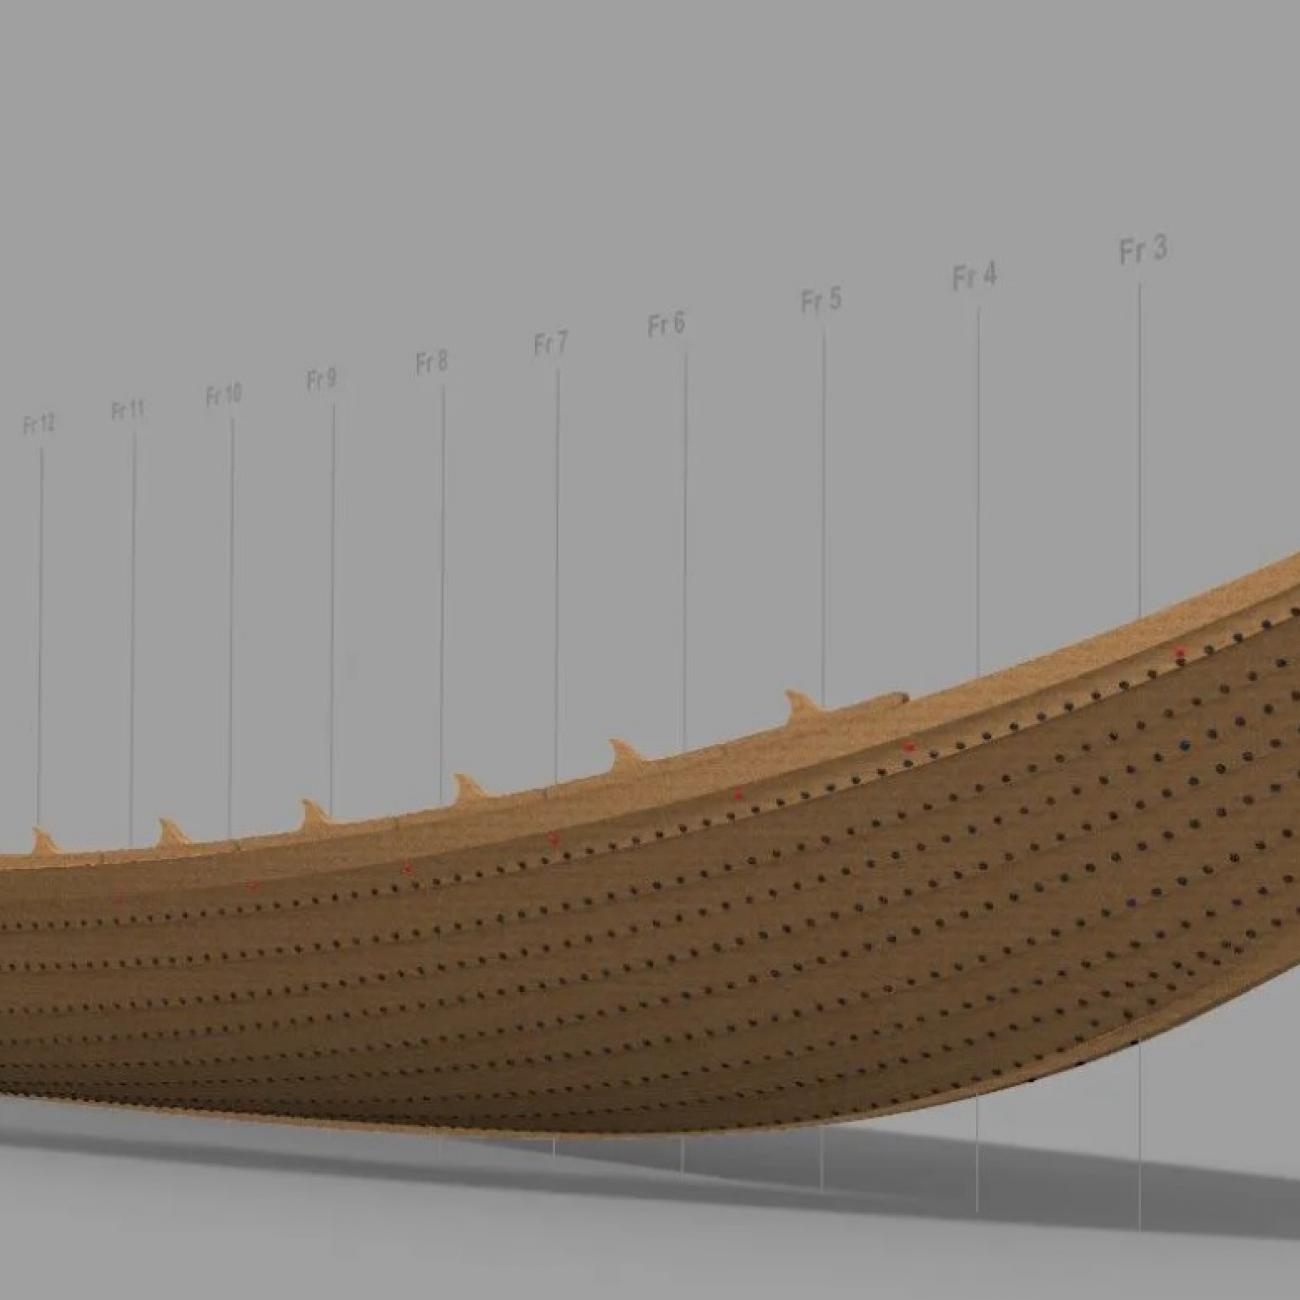 Sutton Hoo ship modelled visualisation